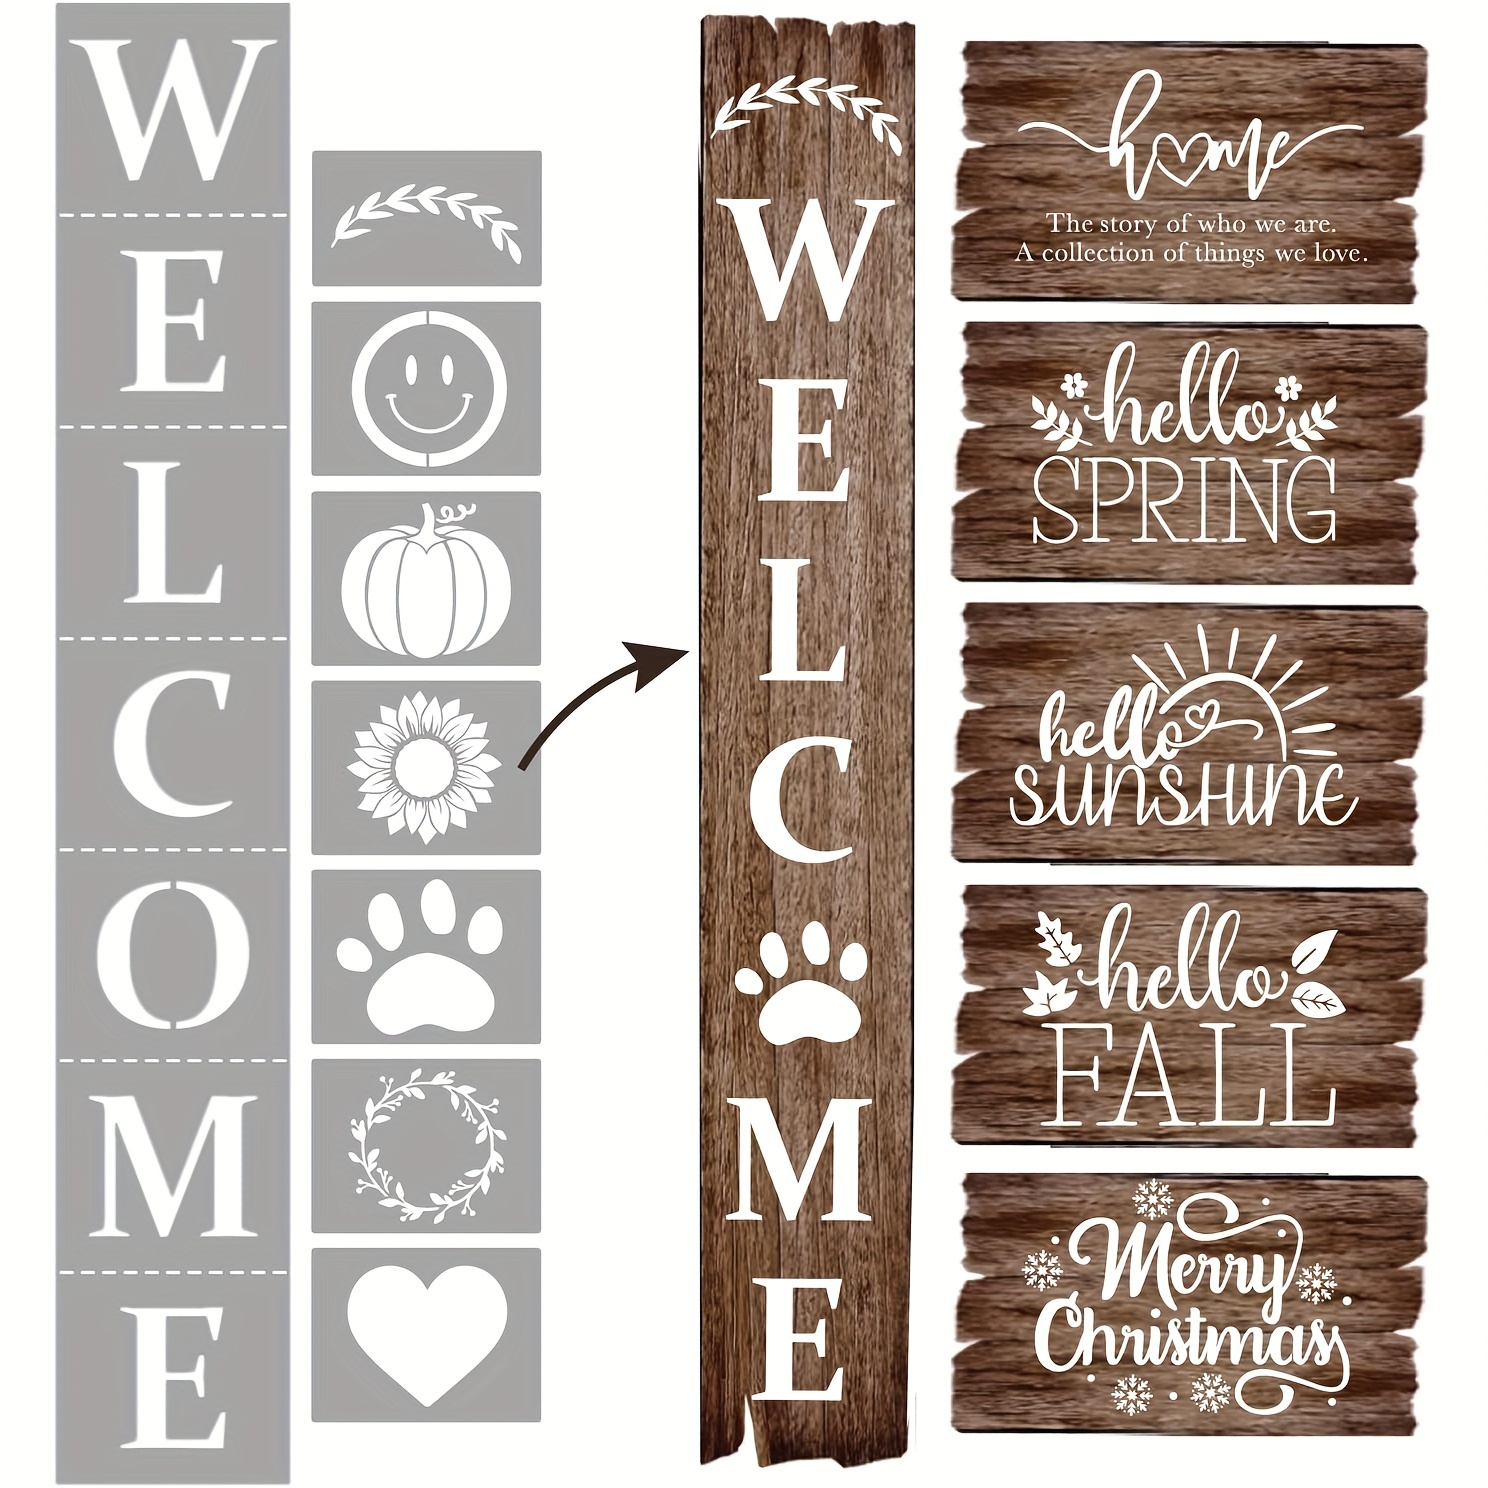 Vertical+WelcomeSign+Stencils  Welcome stencil, Letter stencils, Lettering